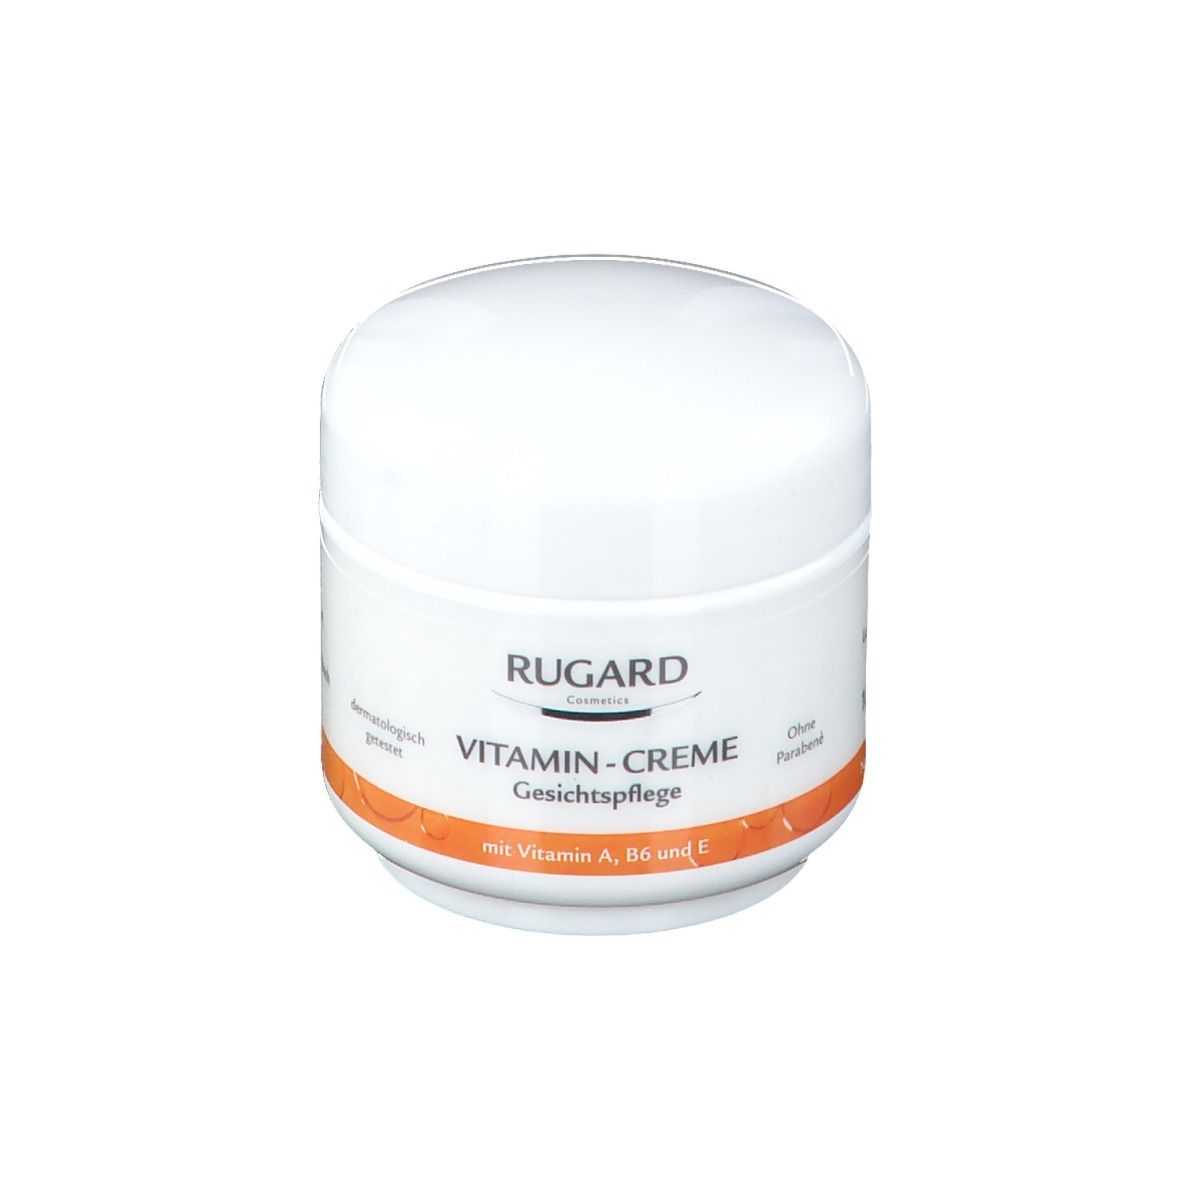 Image of RUGARD Vitamin-Creme Gesichtspflege